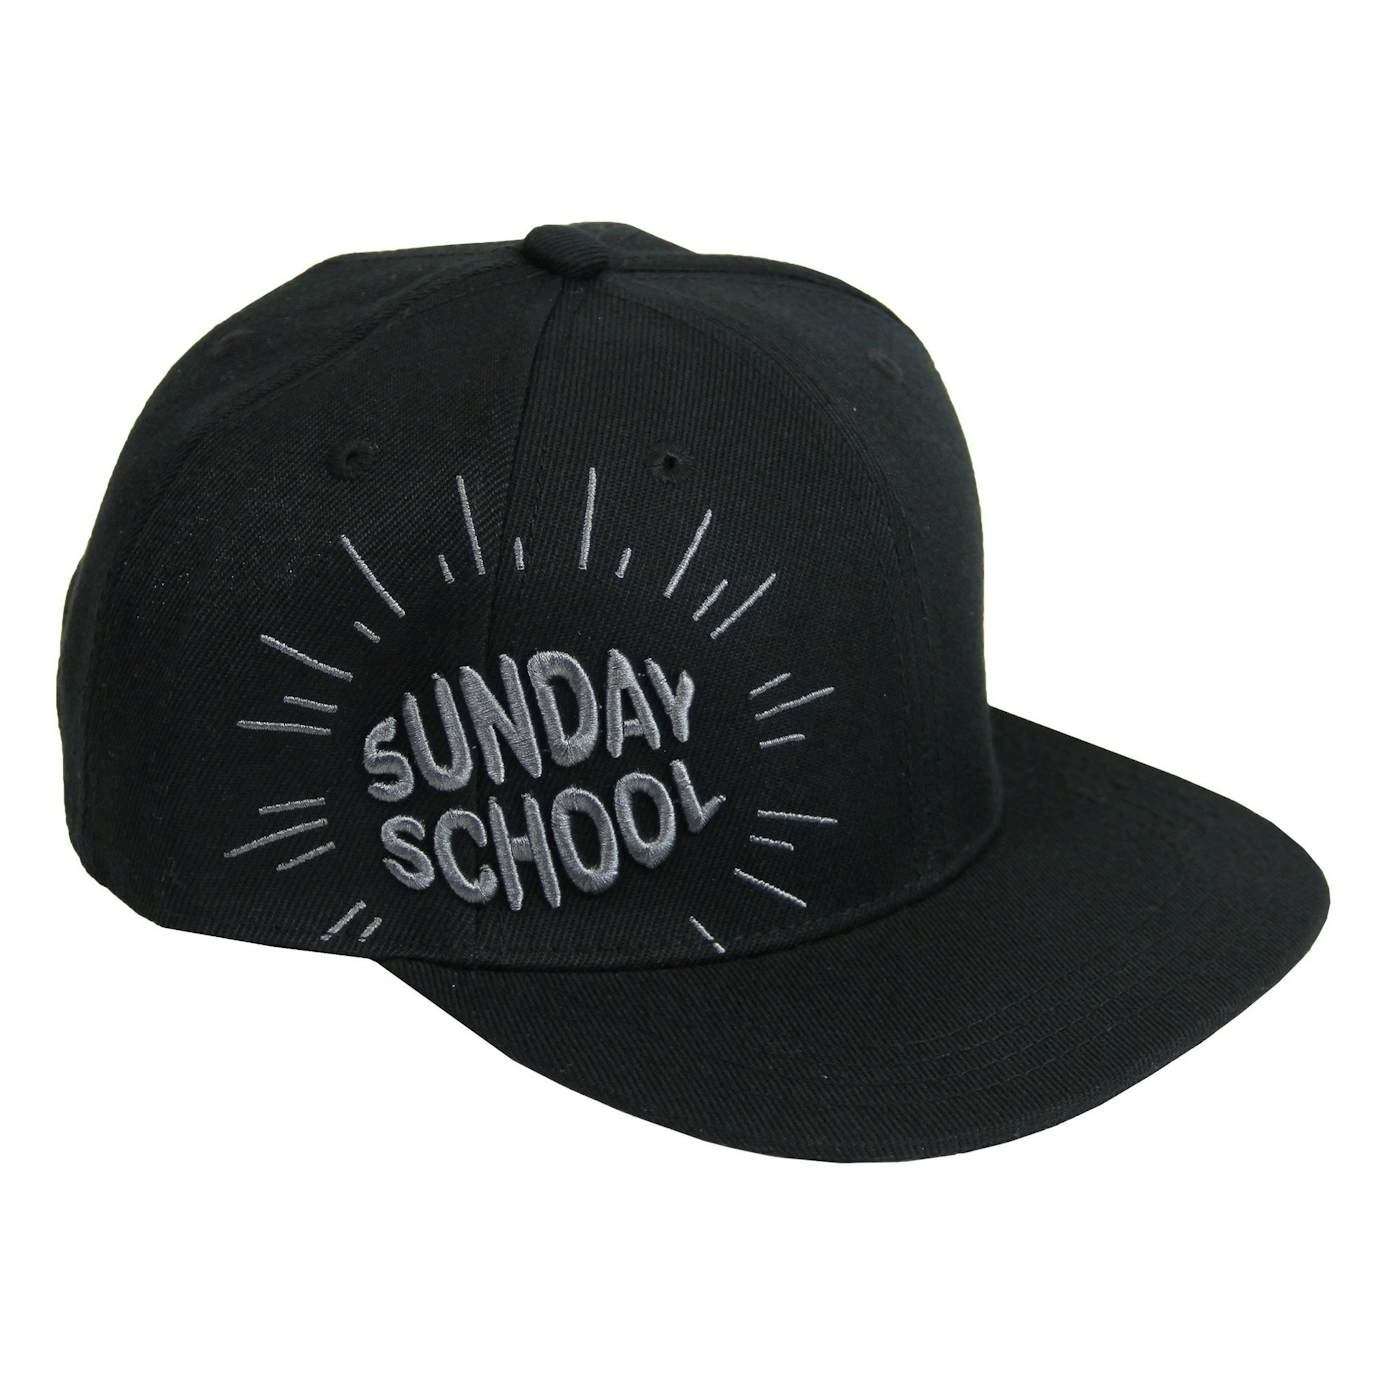 Electric Zoo Festival 2014 Sunday School Snapback Hat